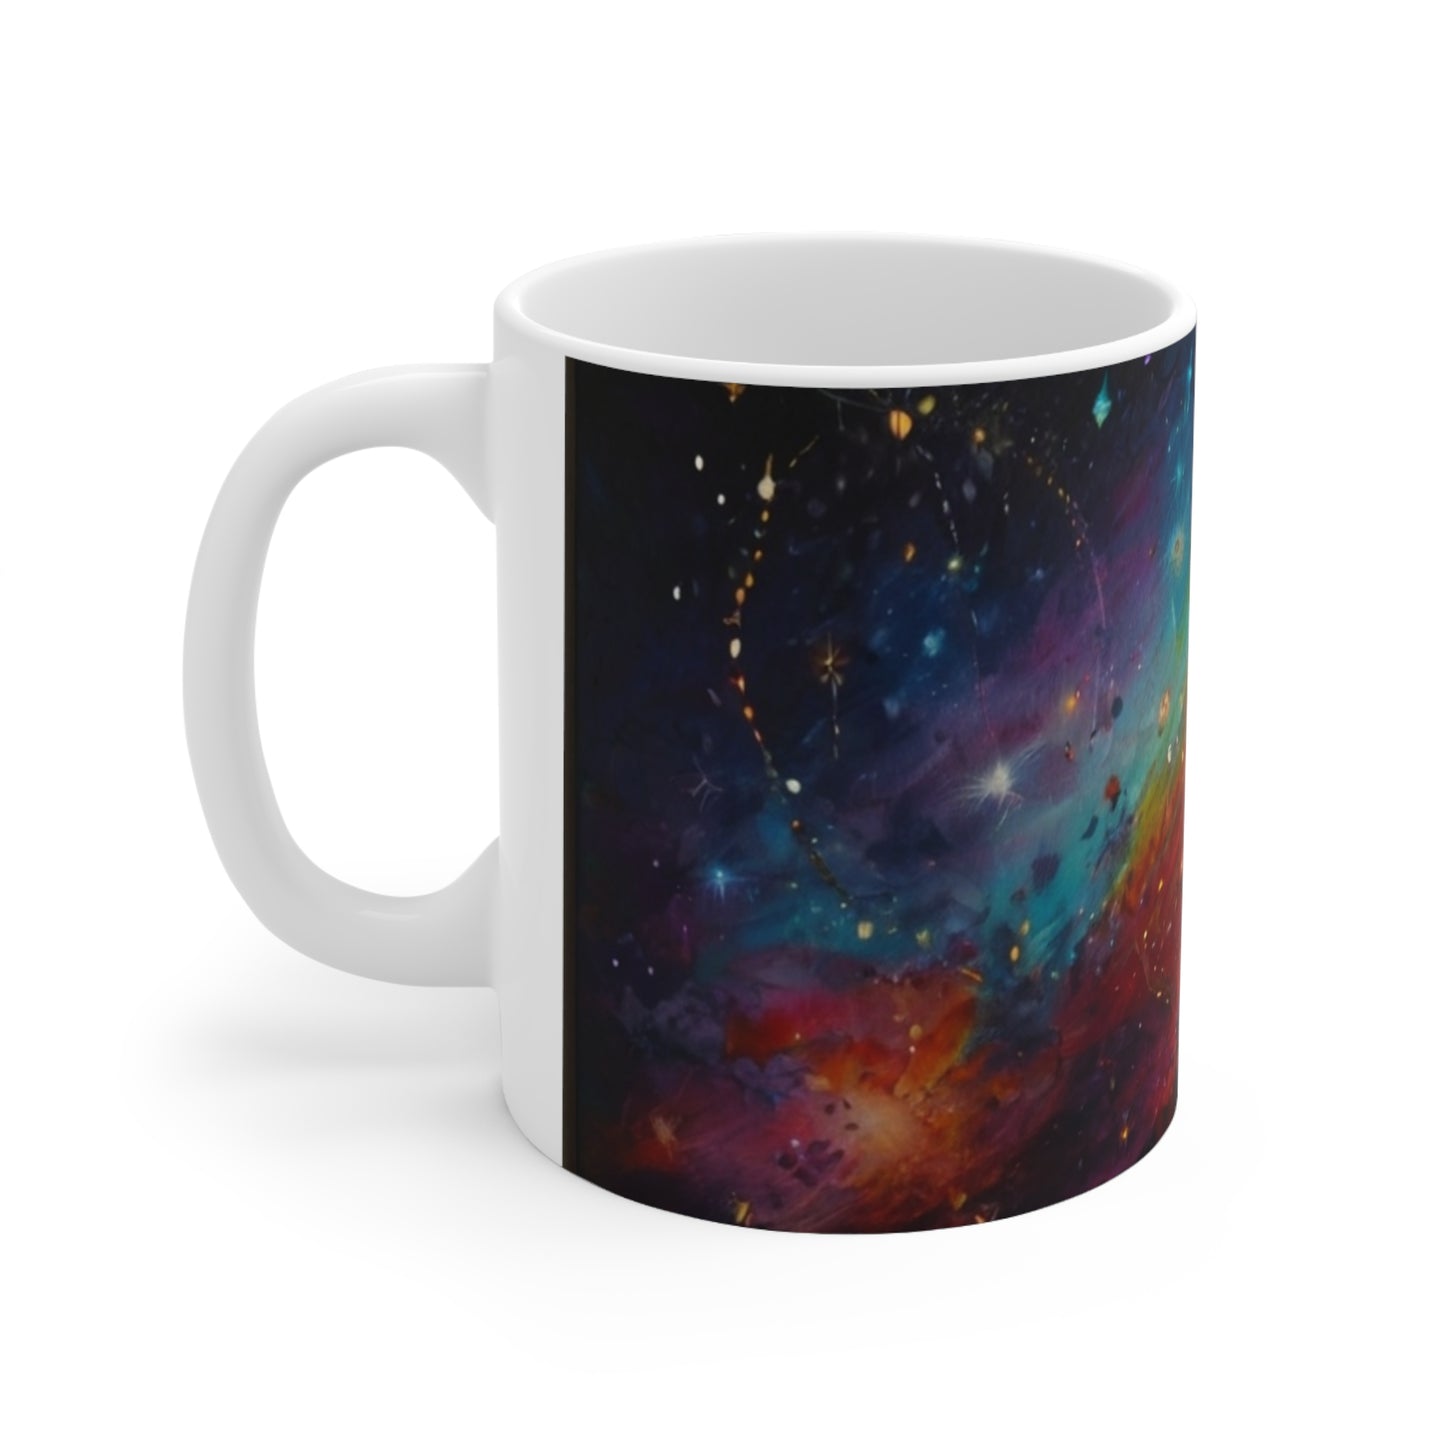 Colourful Constellations Mug - Ceramic Coffee Mug 11oz